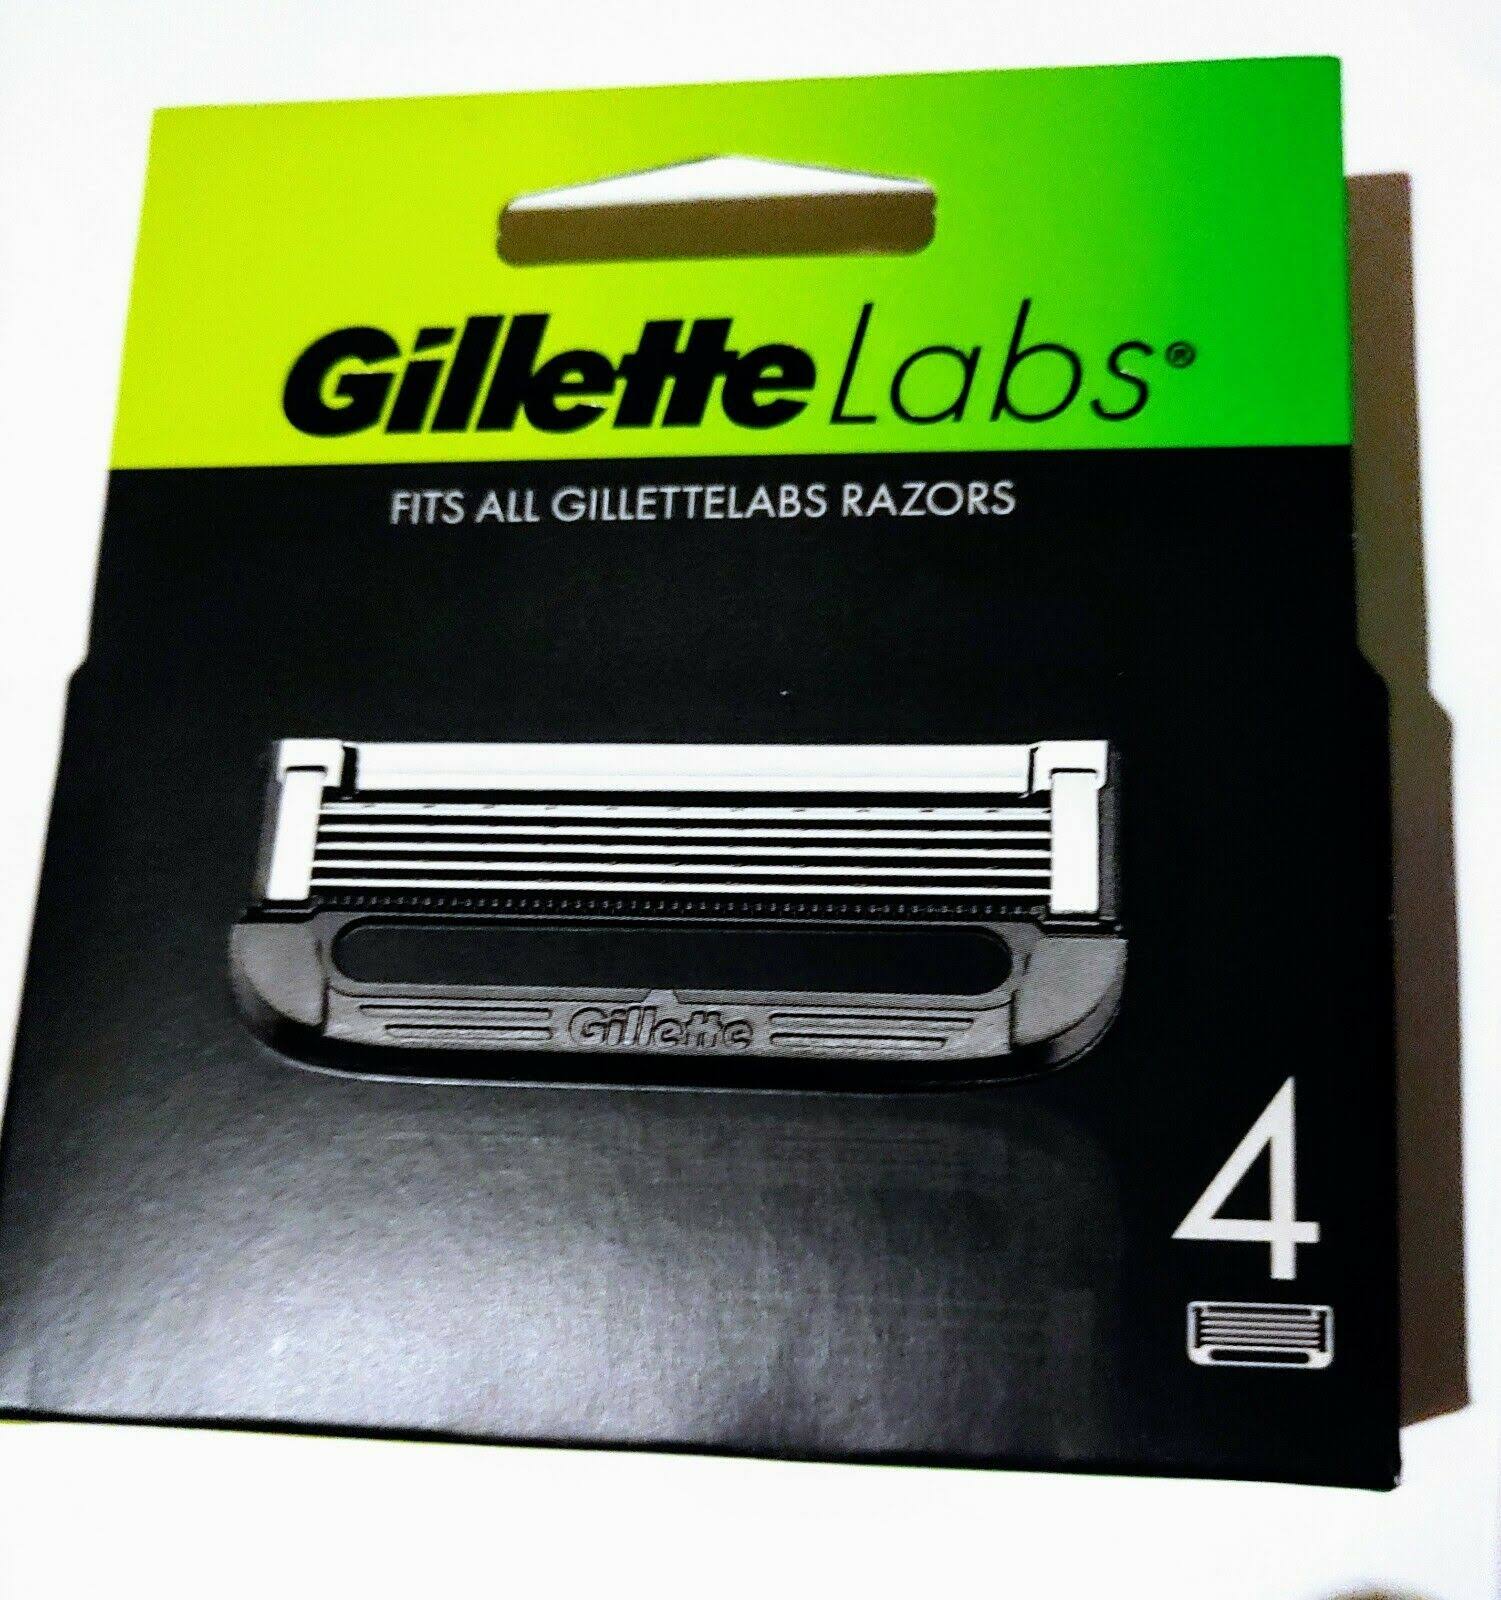 Gillette Labs Razor Blades - Pack of 4. Gillette. Black. Men's Razors. 7702018605378.